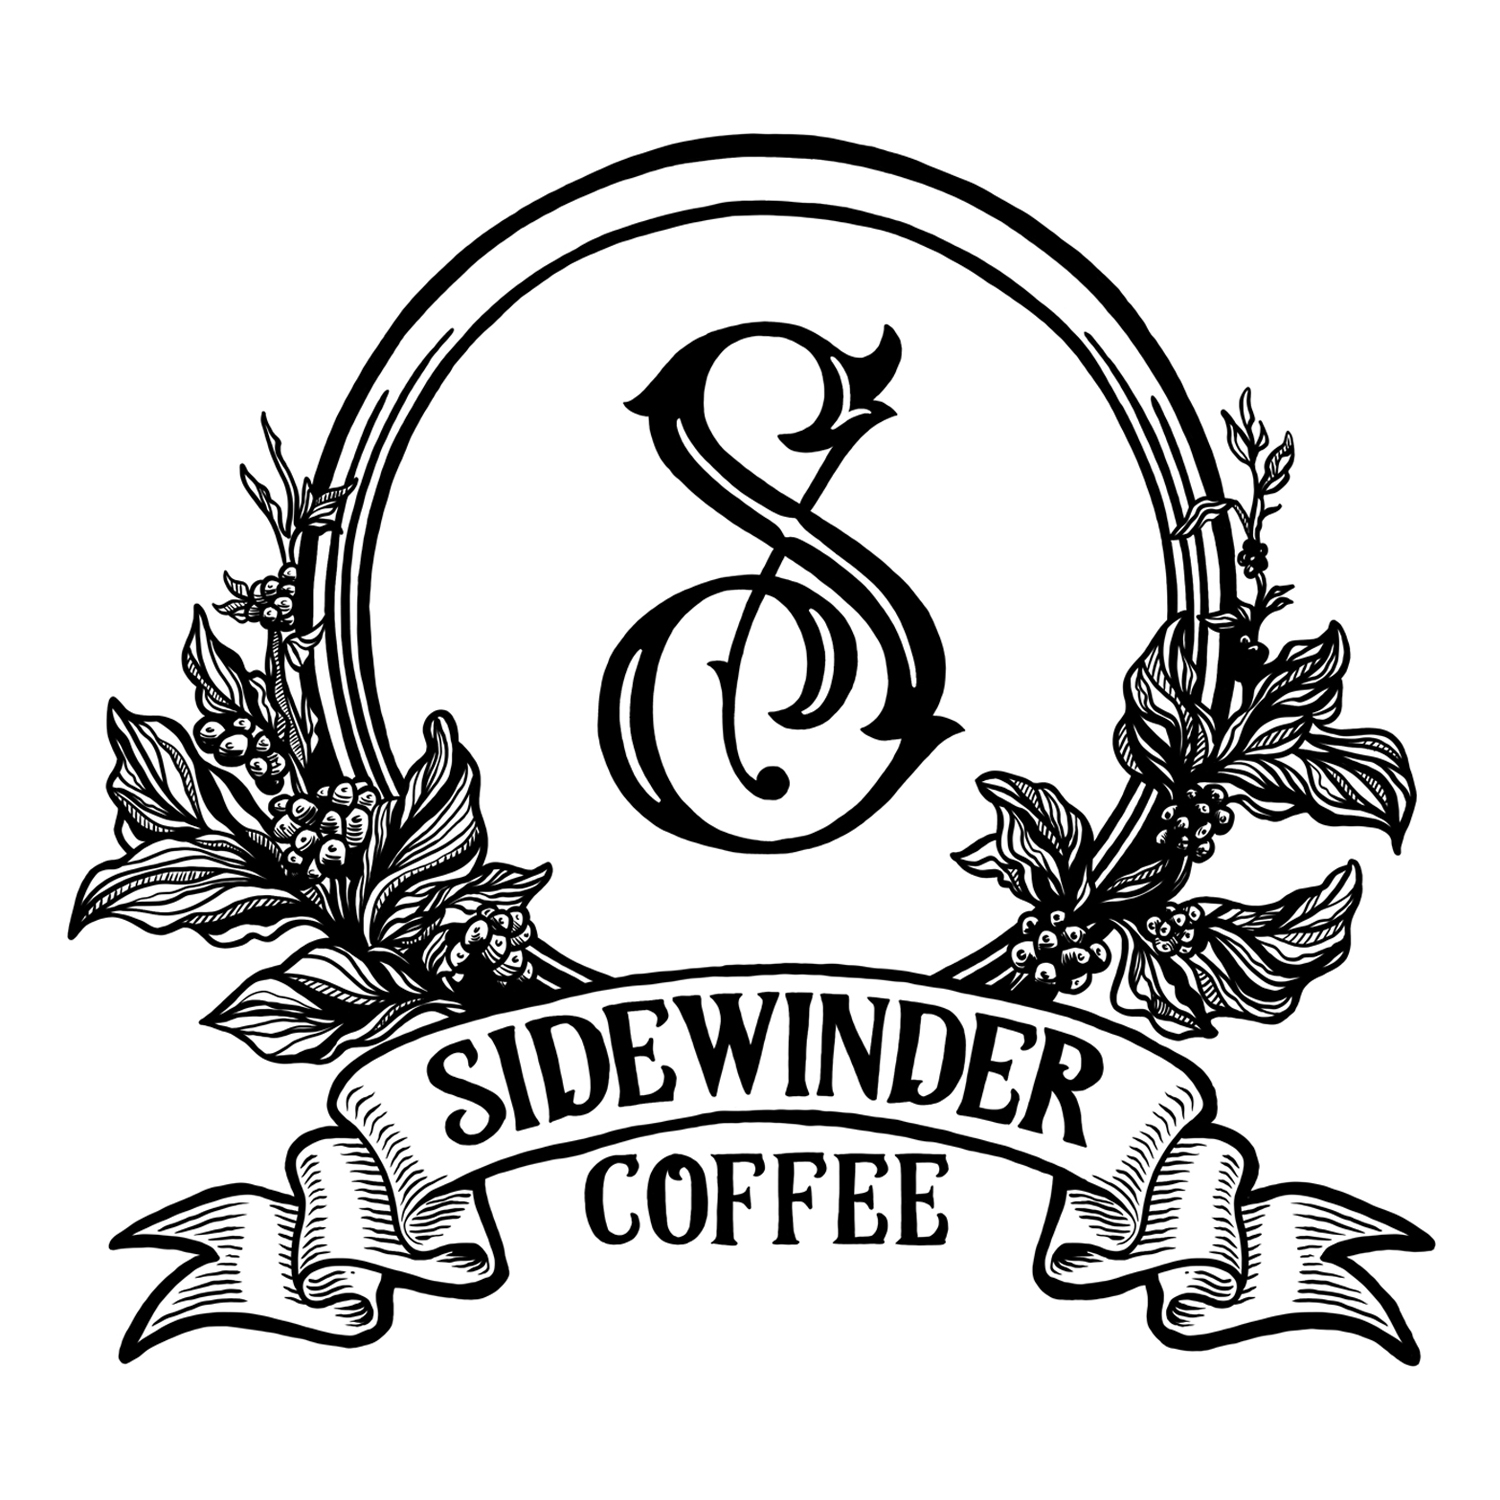 Sidewinder Coffee